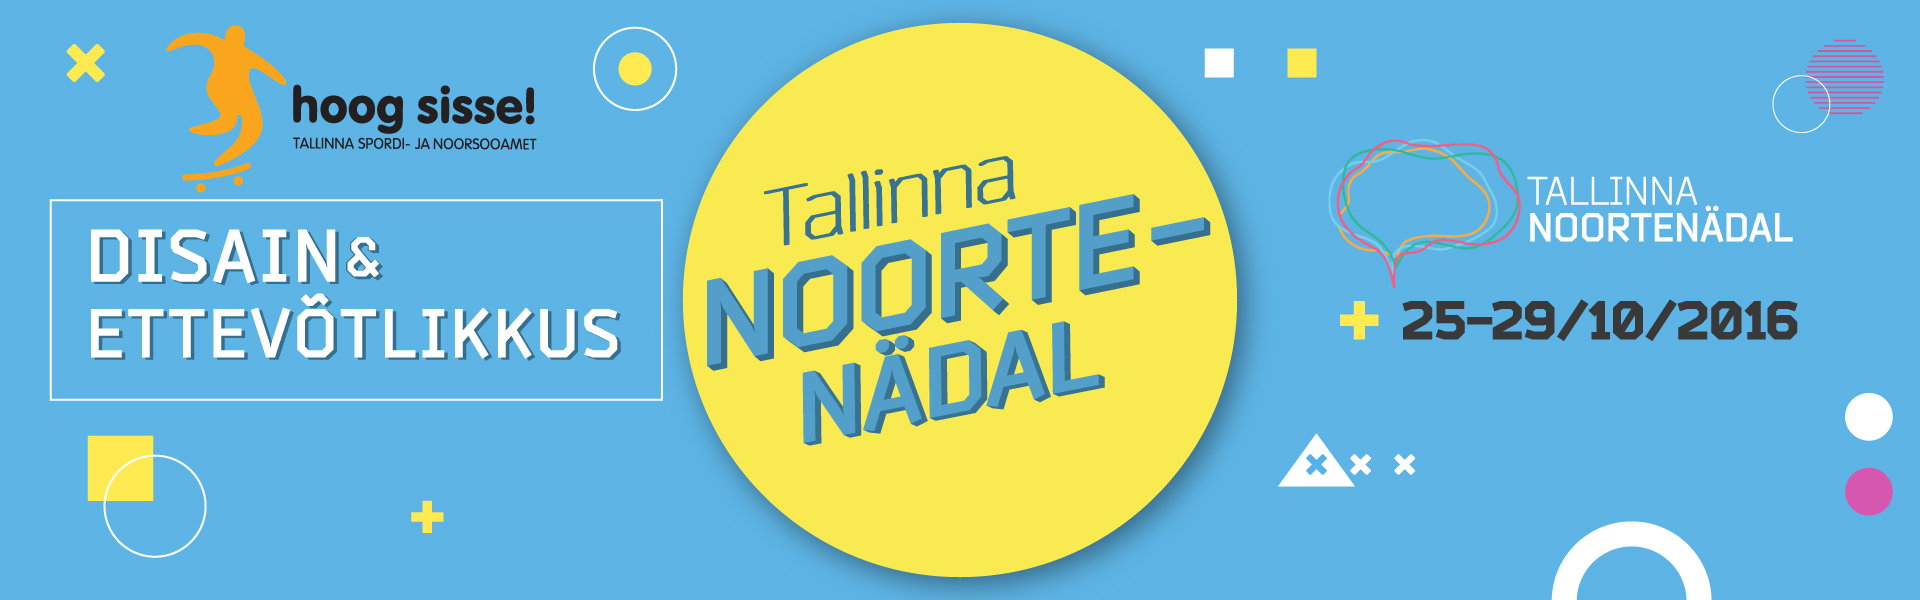 TALLINNA NOORTENÄDAL 2016